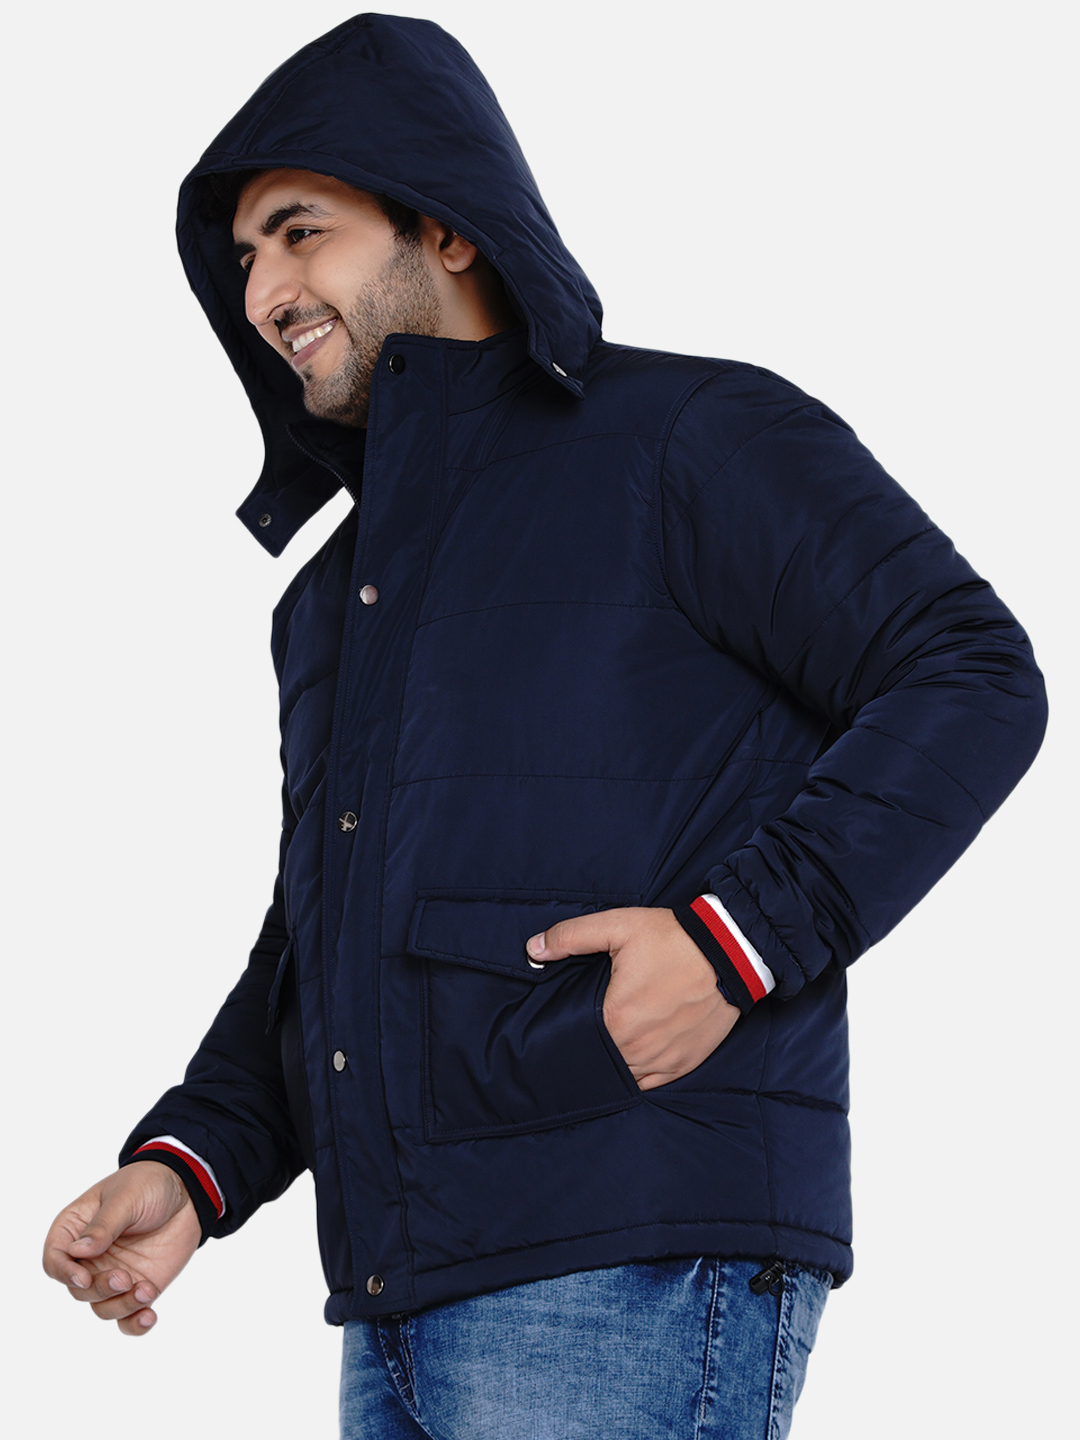 winterwear/jackets/JPJKT73004/jpjkt73004-2.jpg